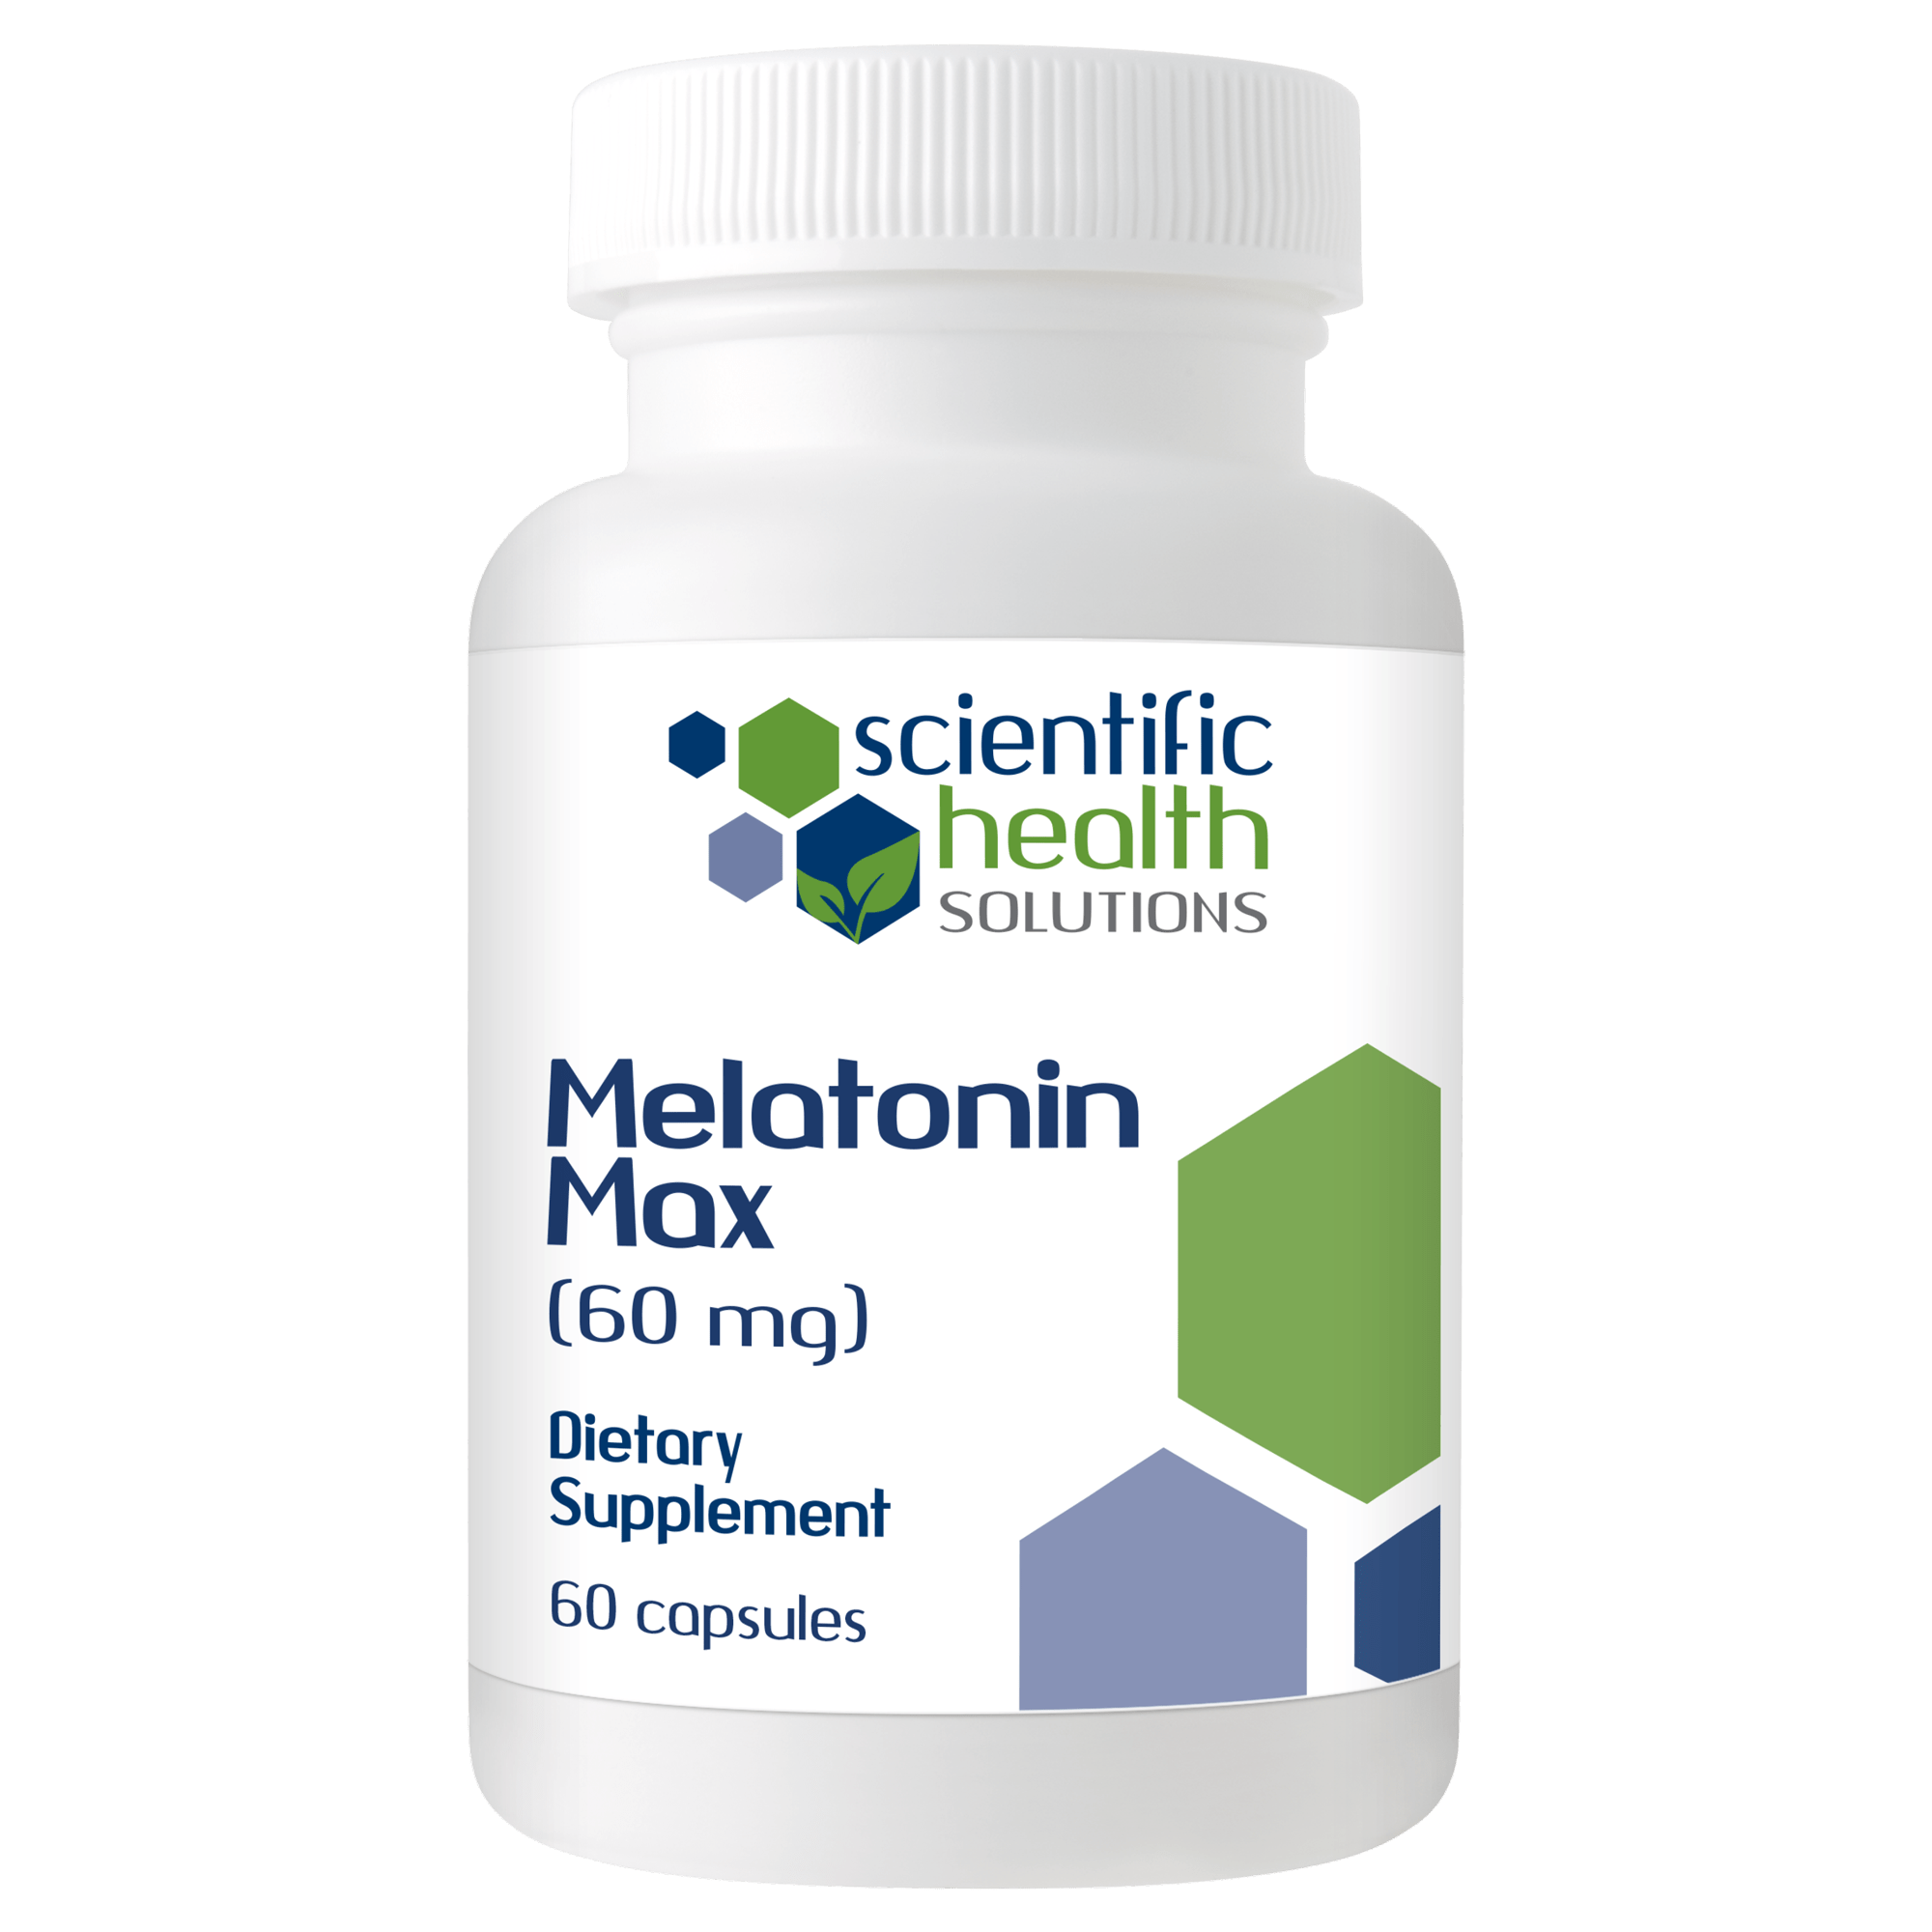 taking melatonin and fighting it